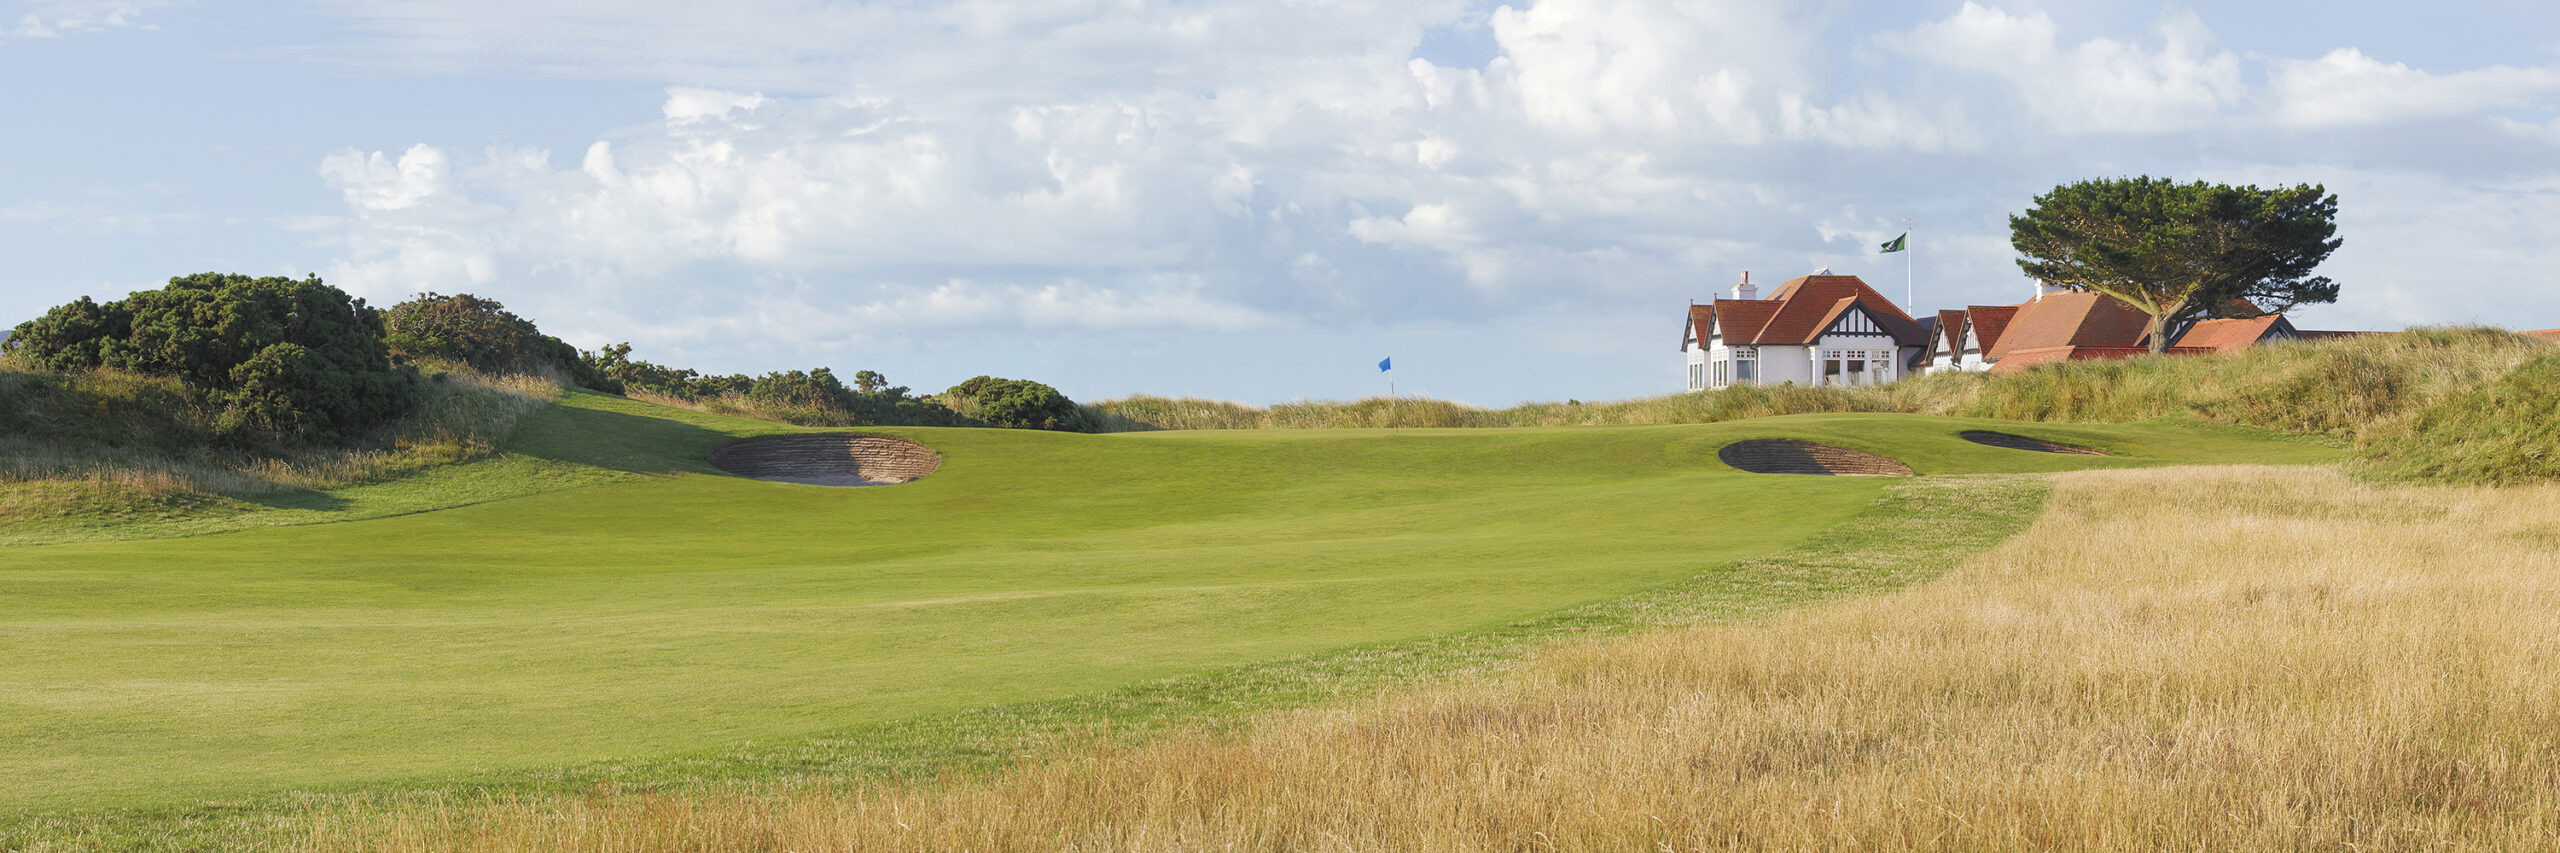 Golf Course Image - Portmarnock No. 18